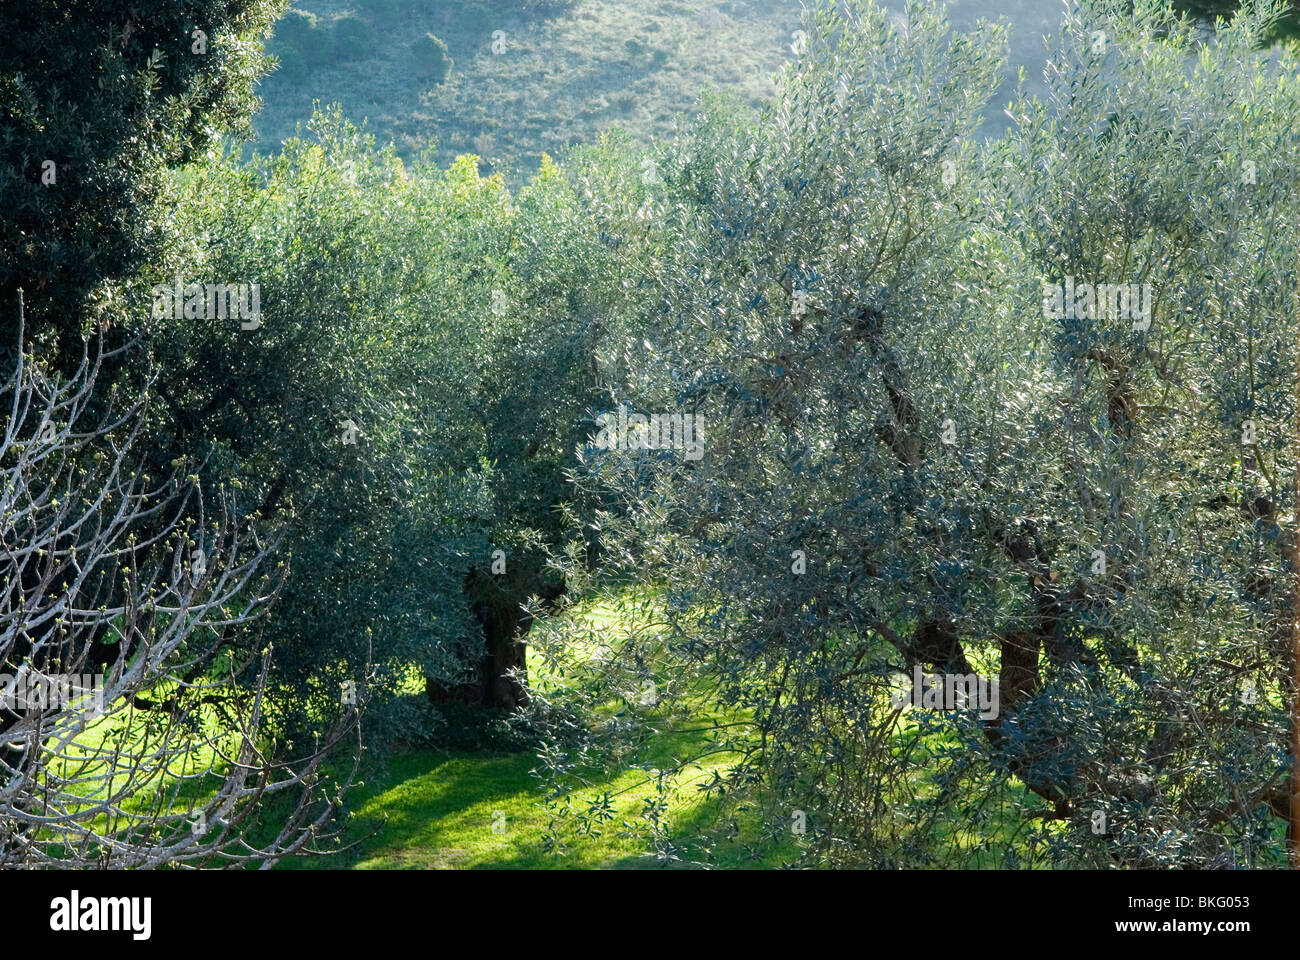 Bäume Olivenhain mit Feigenbaum Frühling Morgen Licht Landschaft der Toskana Italien. Stockfoto